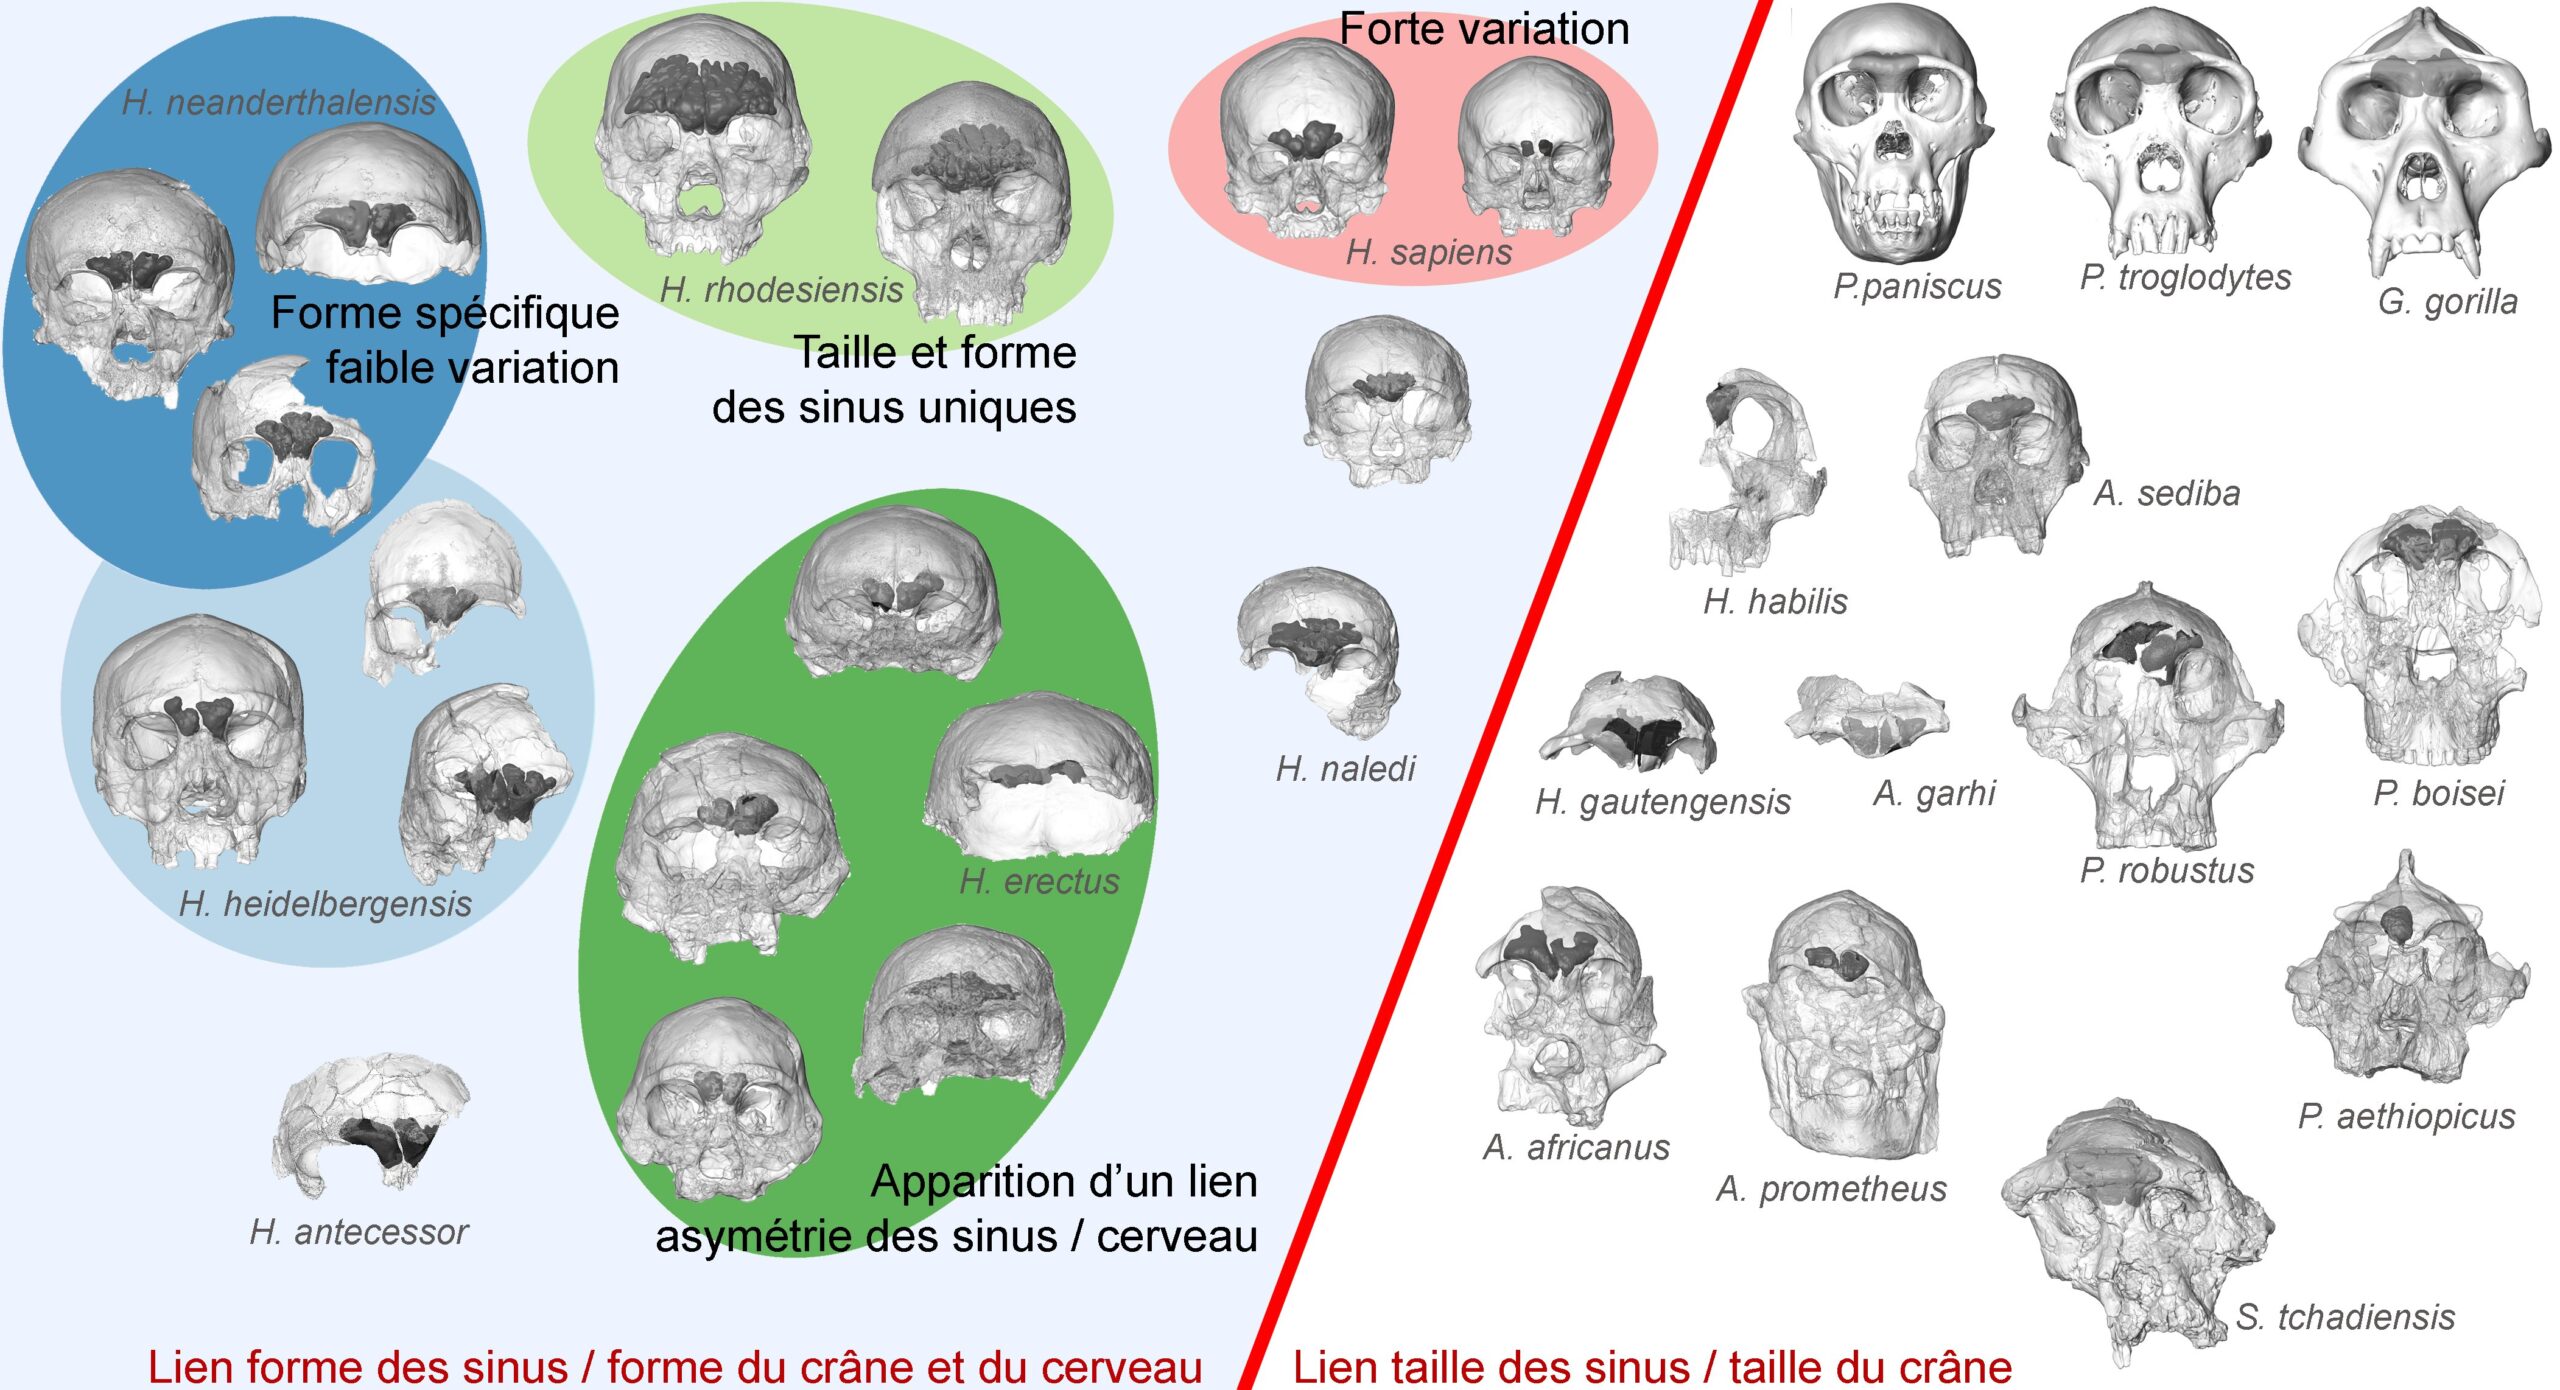 Primates' frontal sinuses senos frontales could help to distinguish species 